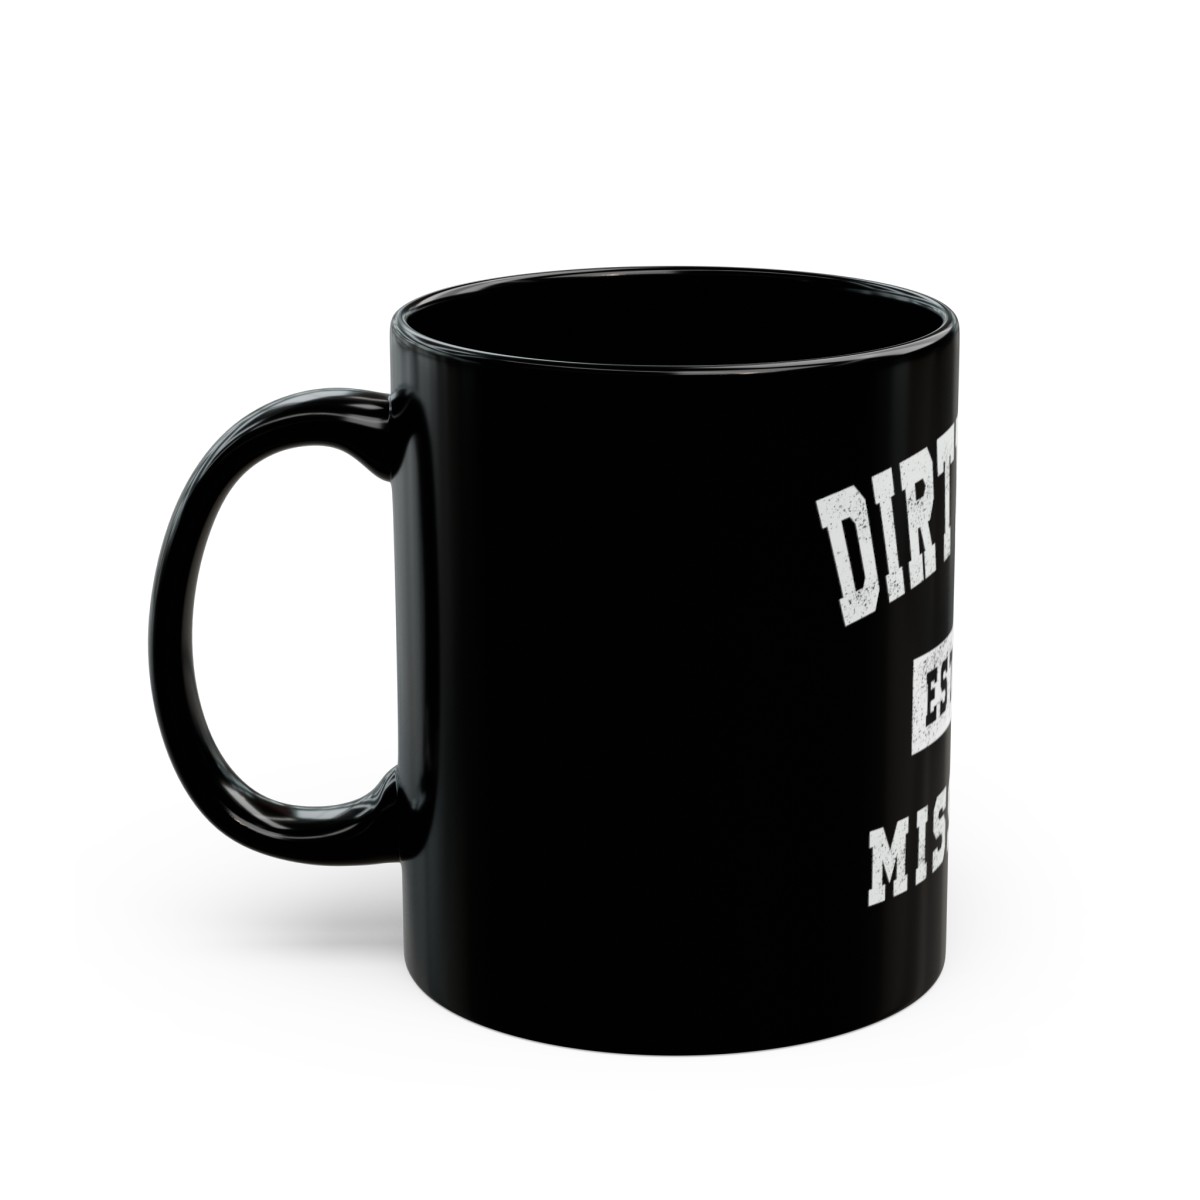 DFM Coffee Mug product thumbnail image